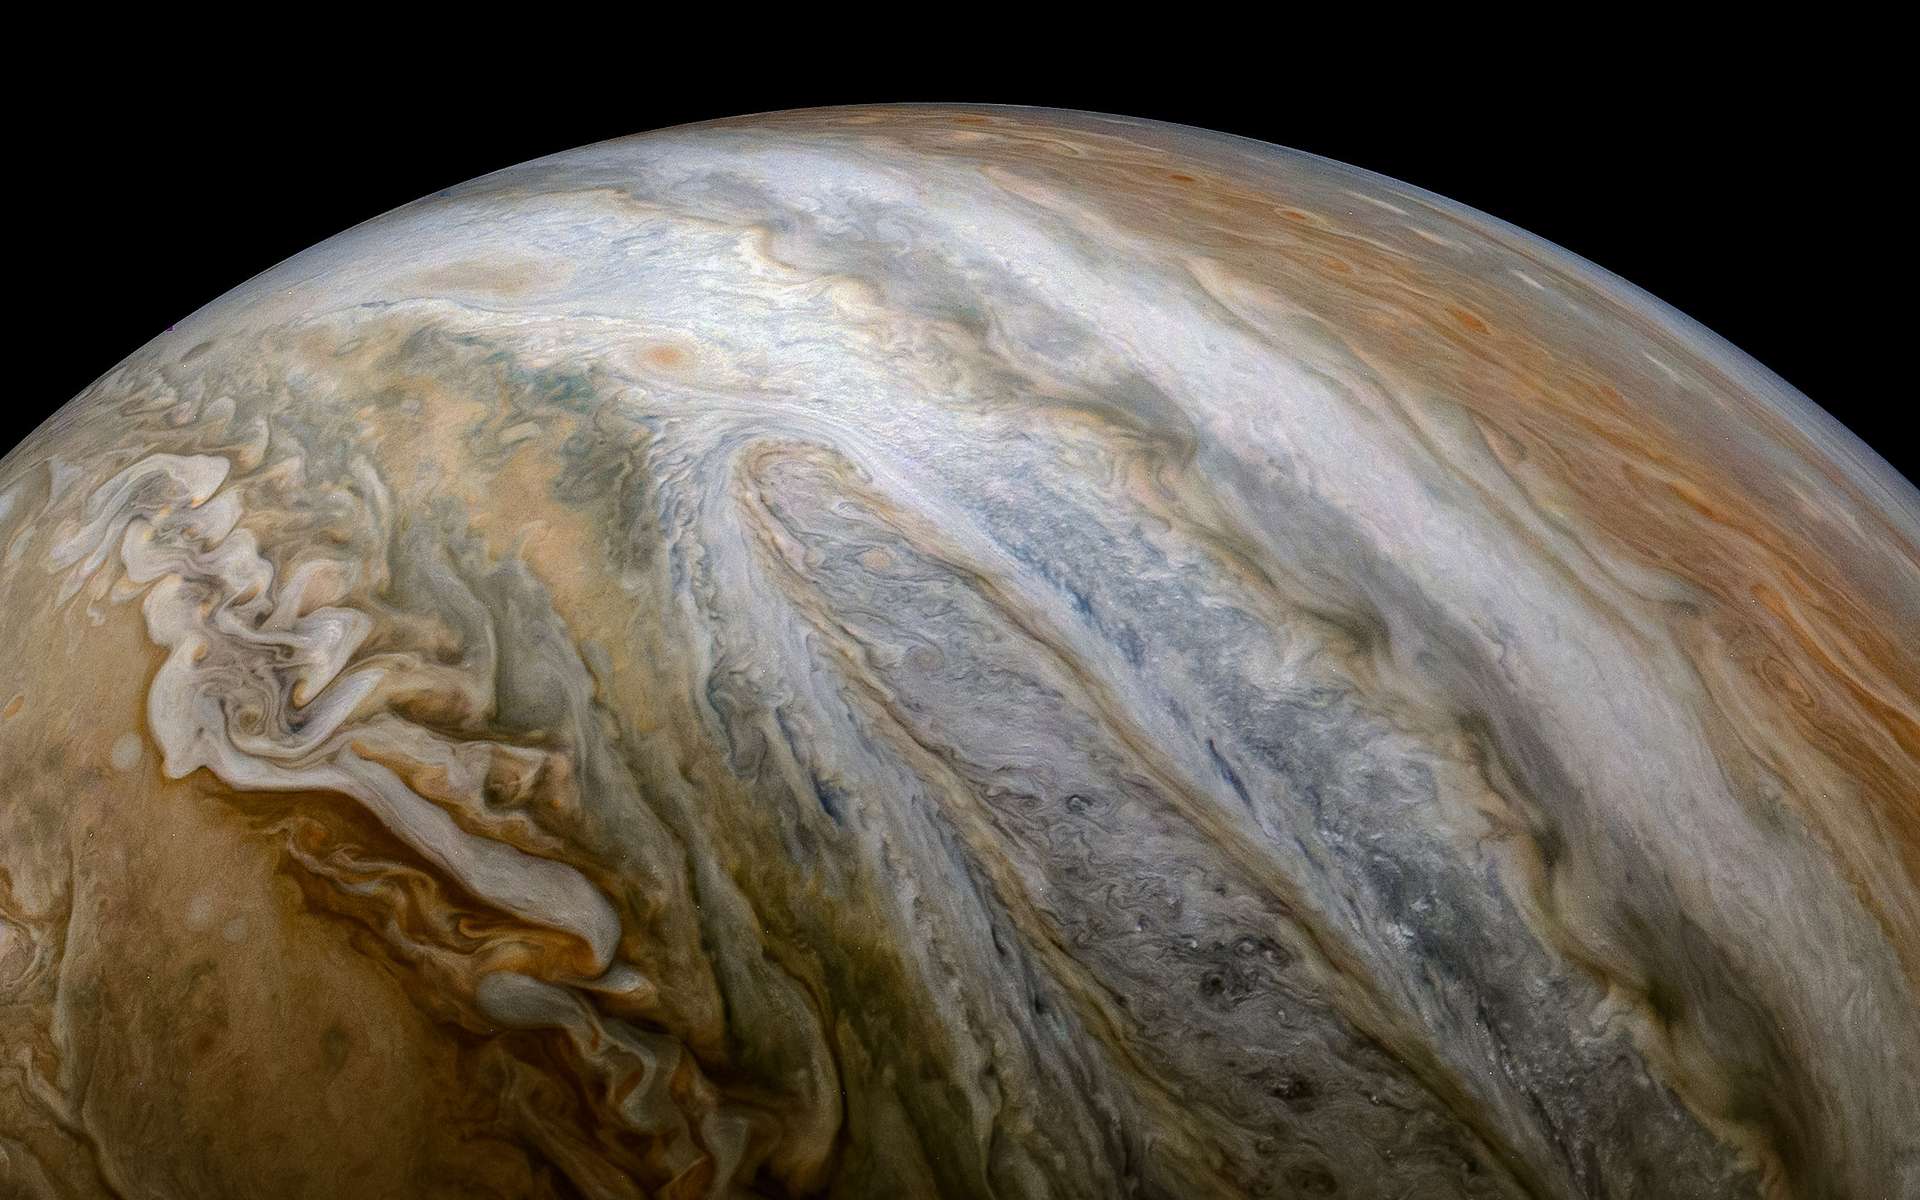 Jupiter survolée par la sonde Juno. © Nasa, JPL-Caltech, SwRI, MSSS, Kevin M. Gill, Apod (Nasa)